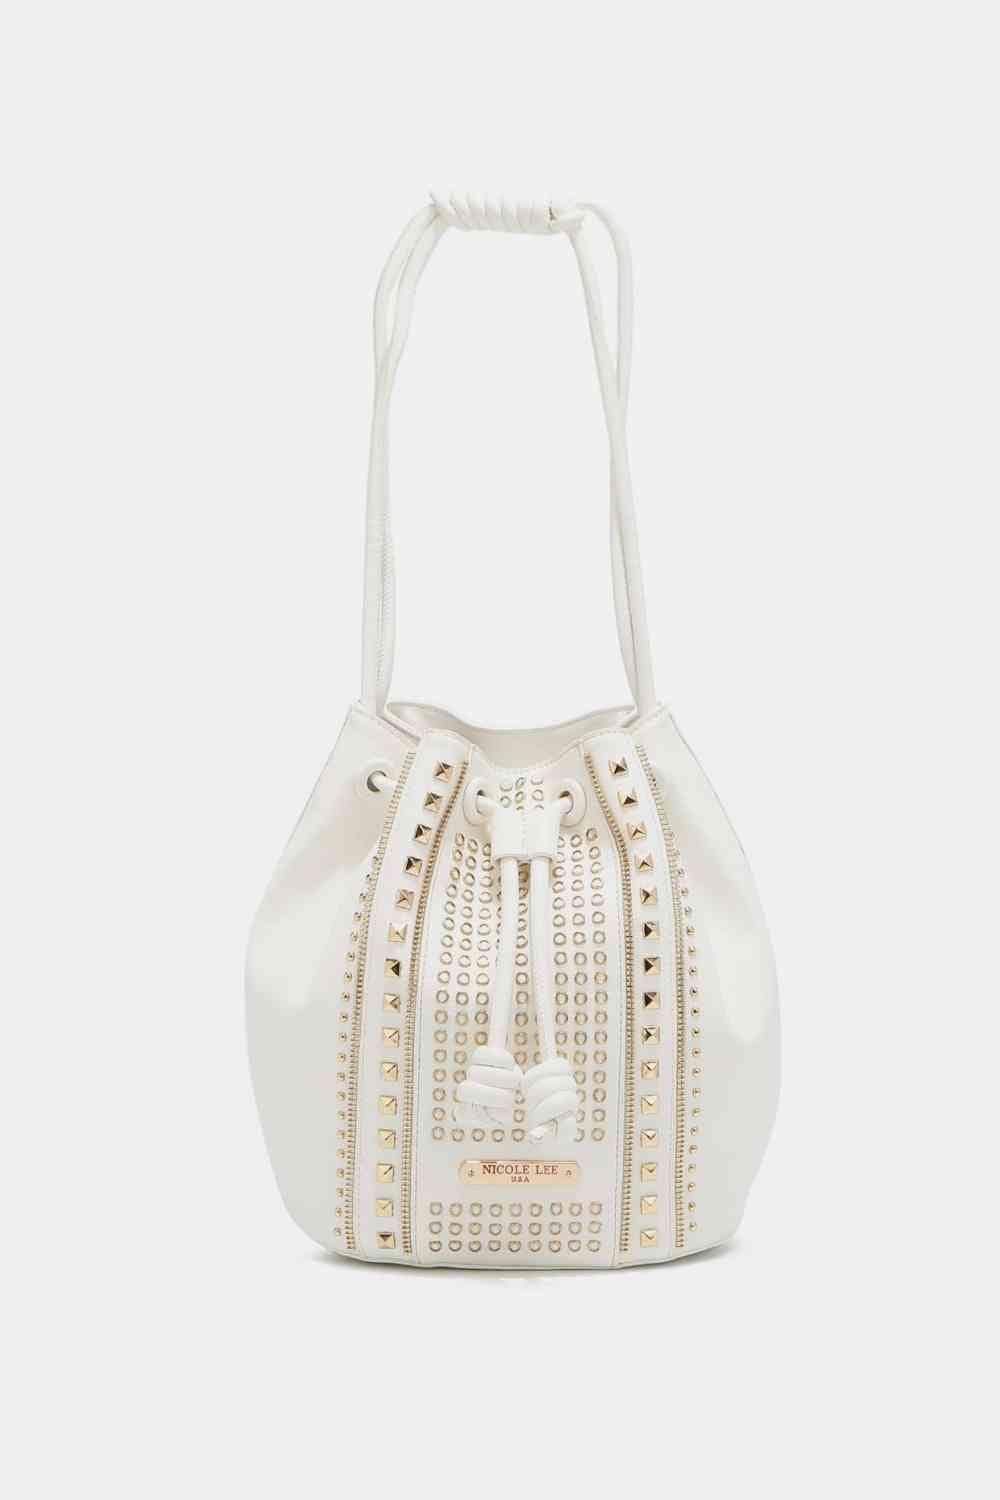 Nicole Lee USA Amy Studded Bucket Bag White / One Size